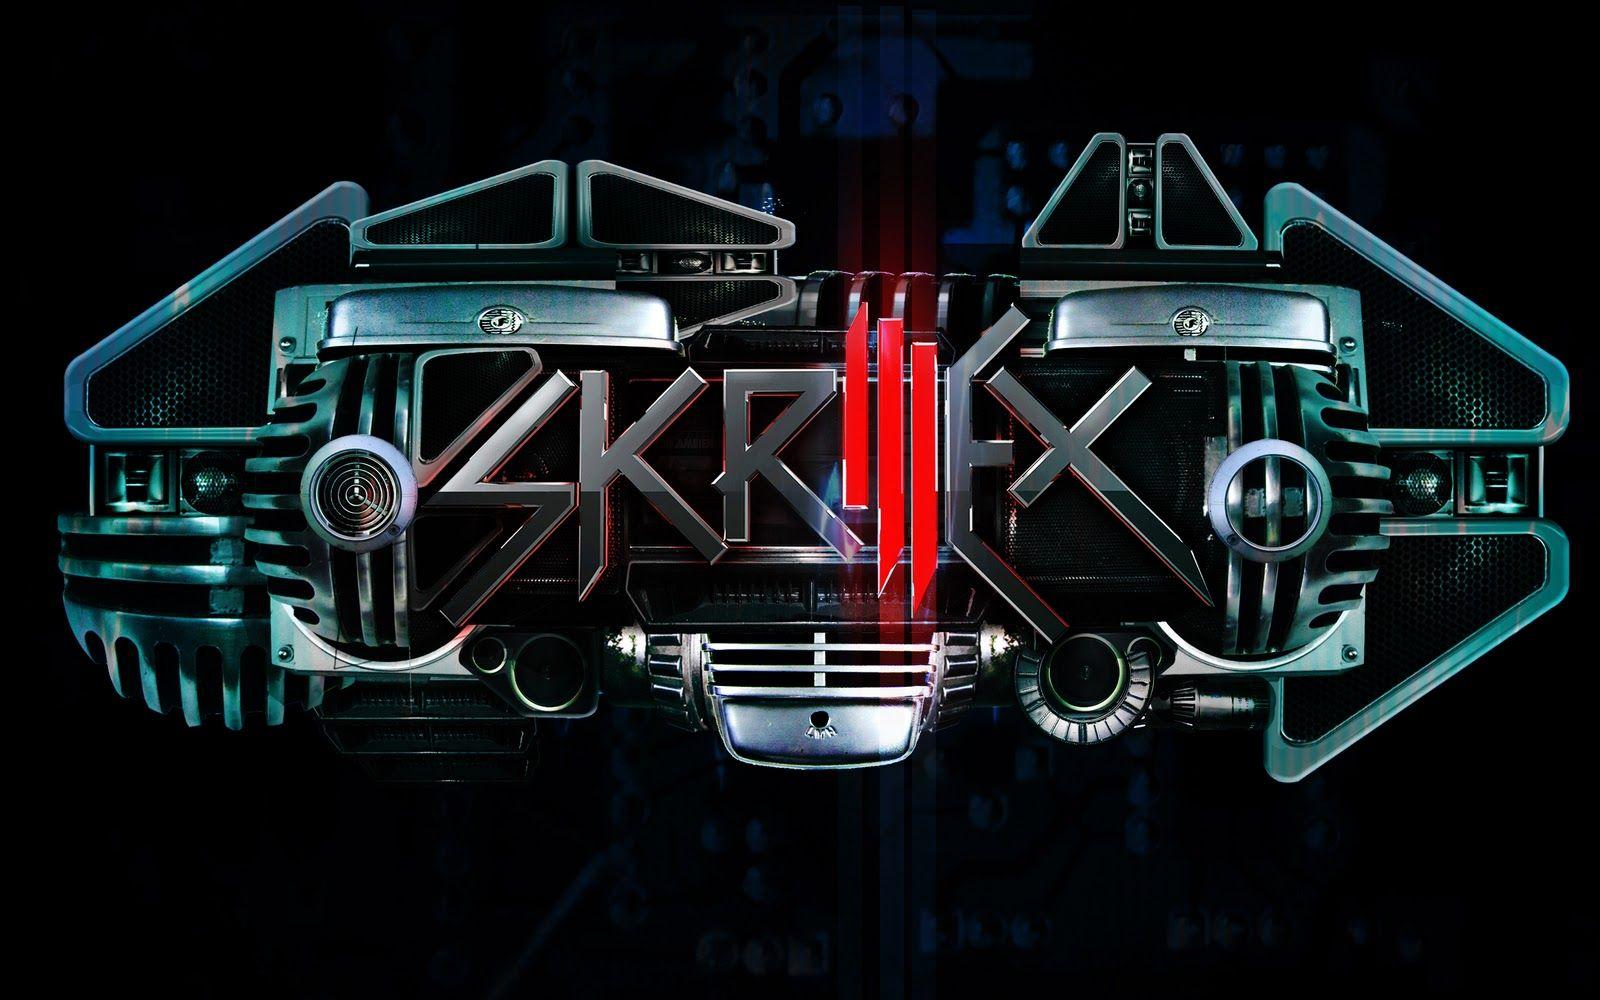 Skrillex HD Wallpaper and Background Image